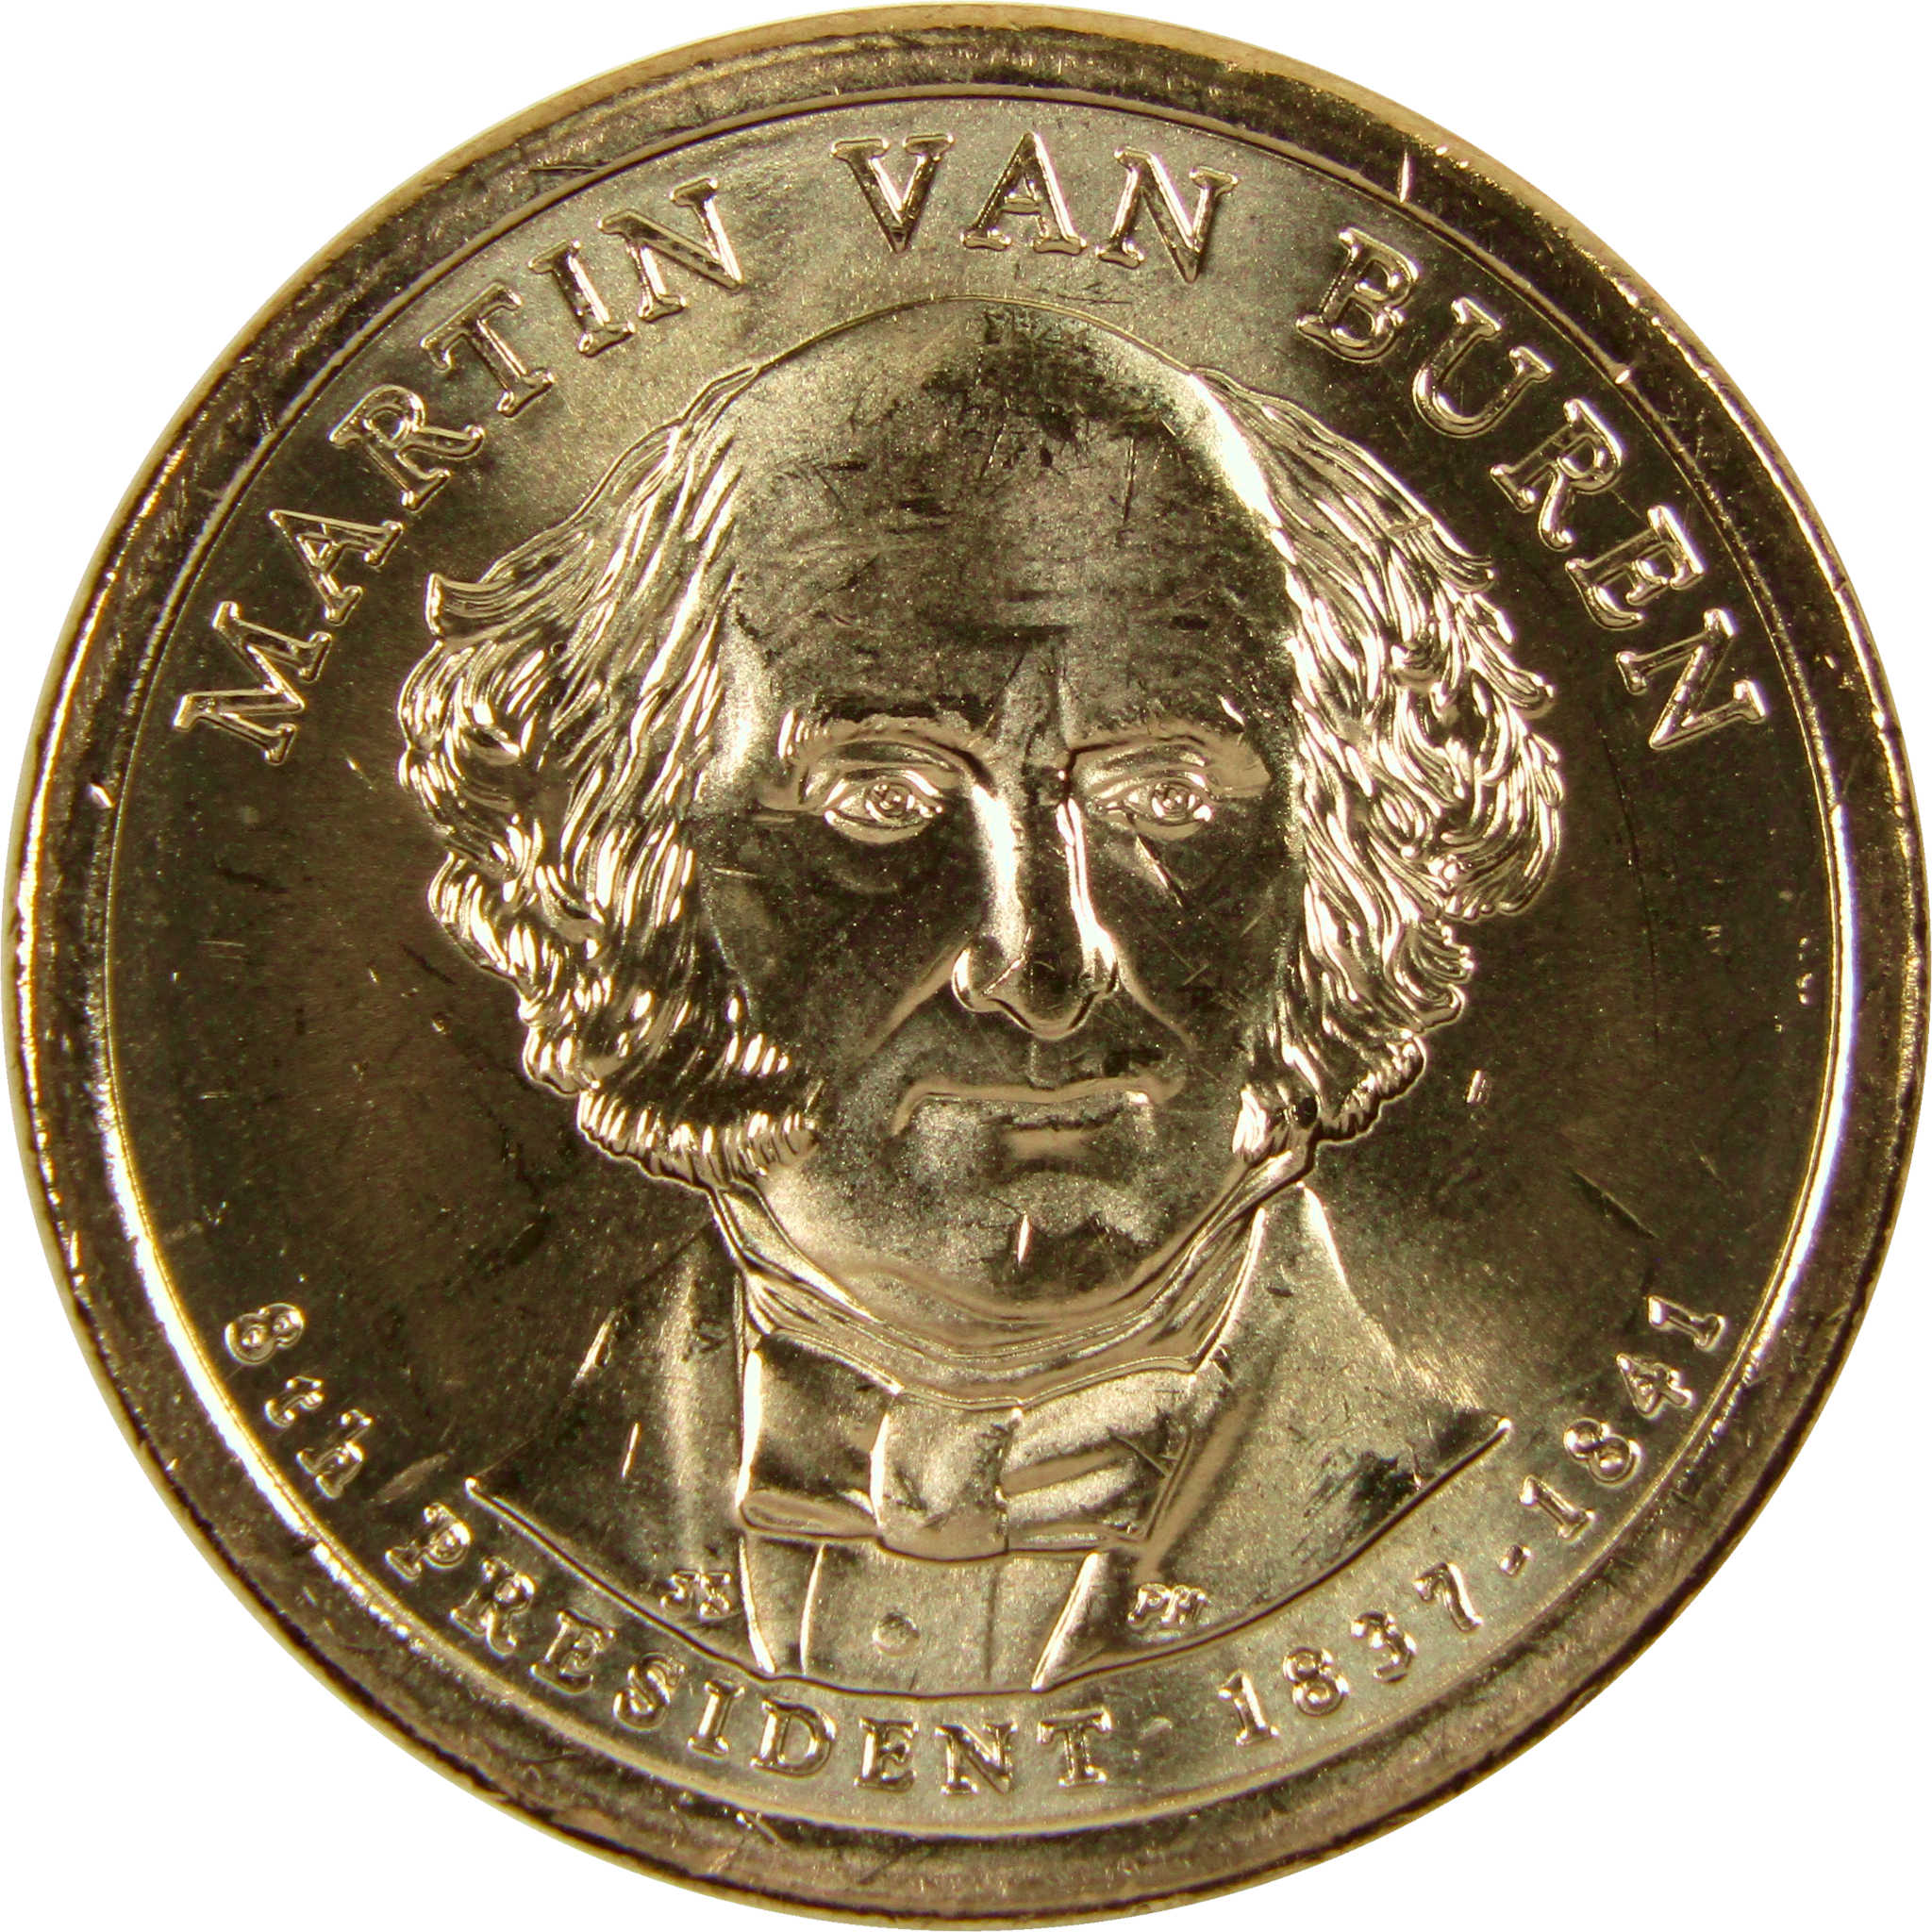 2008 D Martin Van Buren Presidential Dollar BU Uncirculated $1 Coin